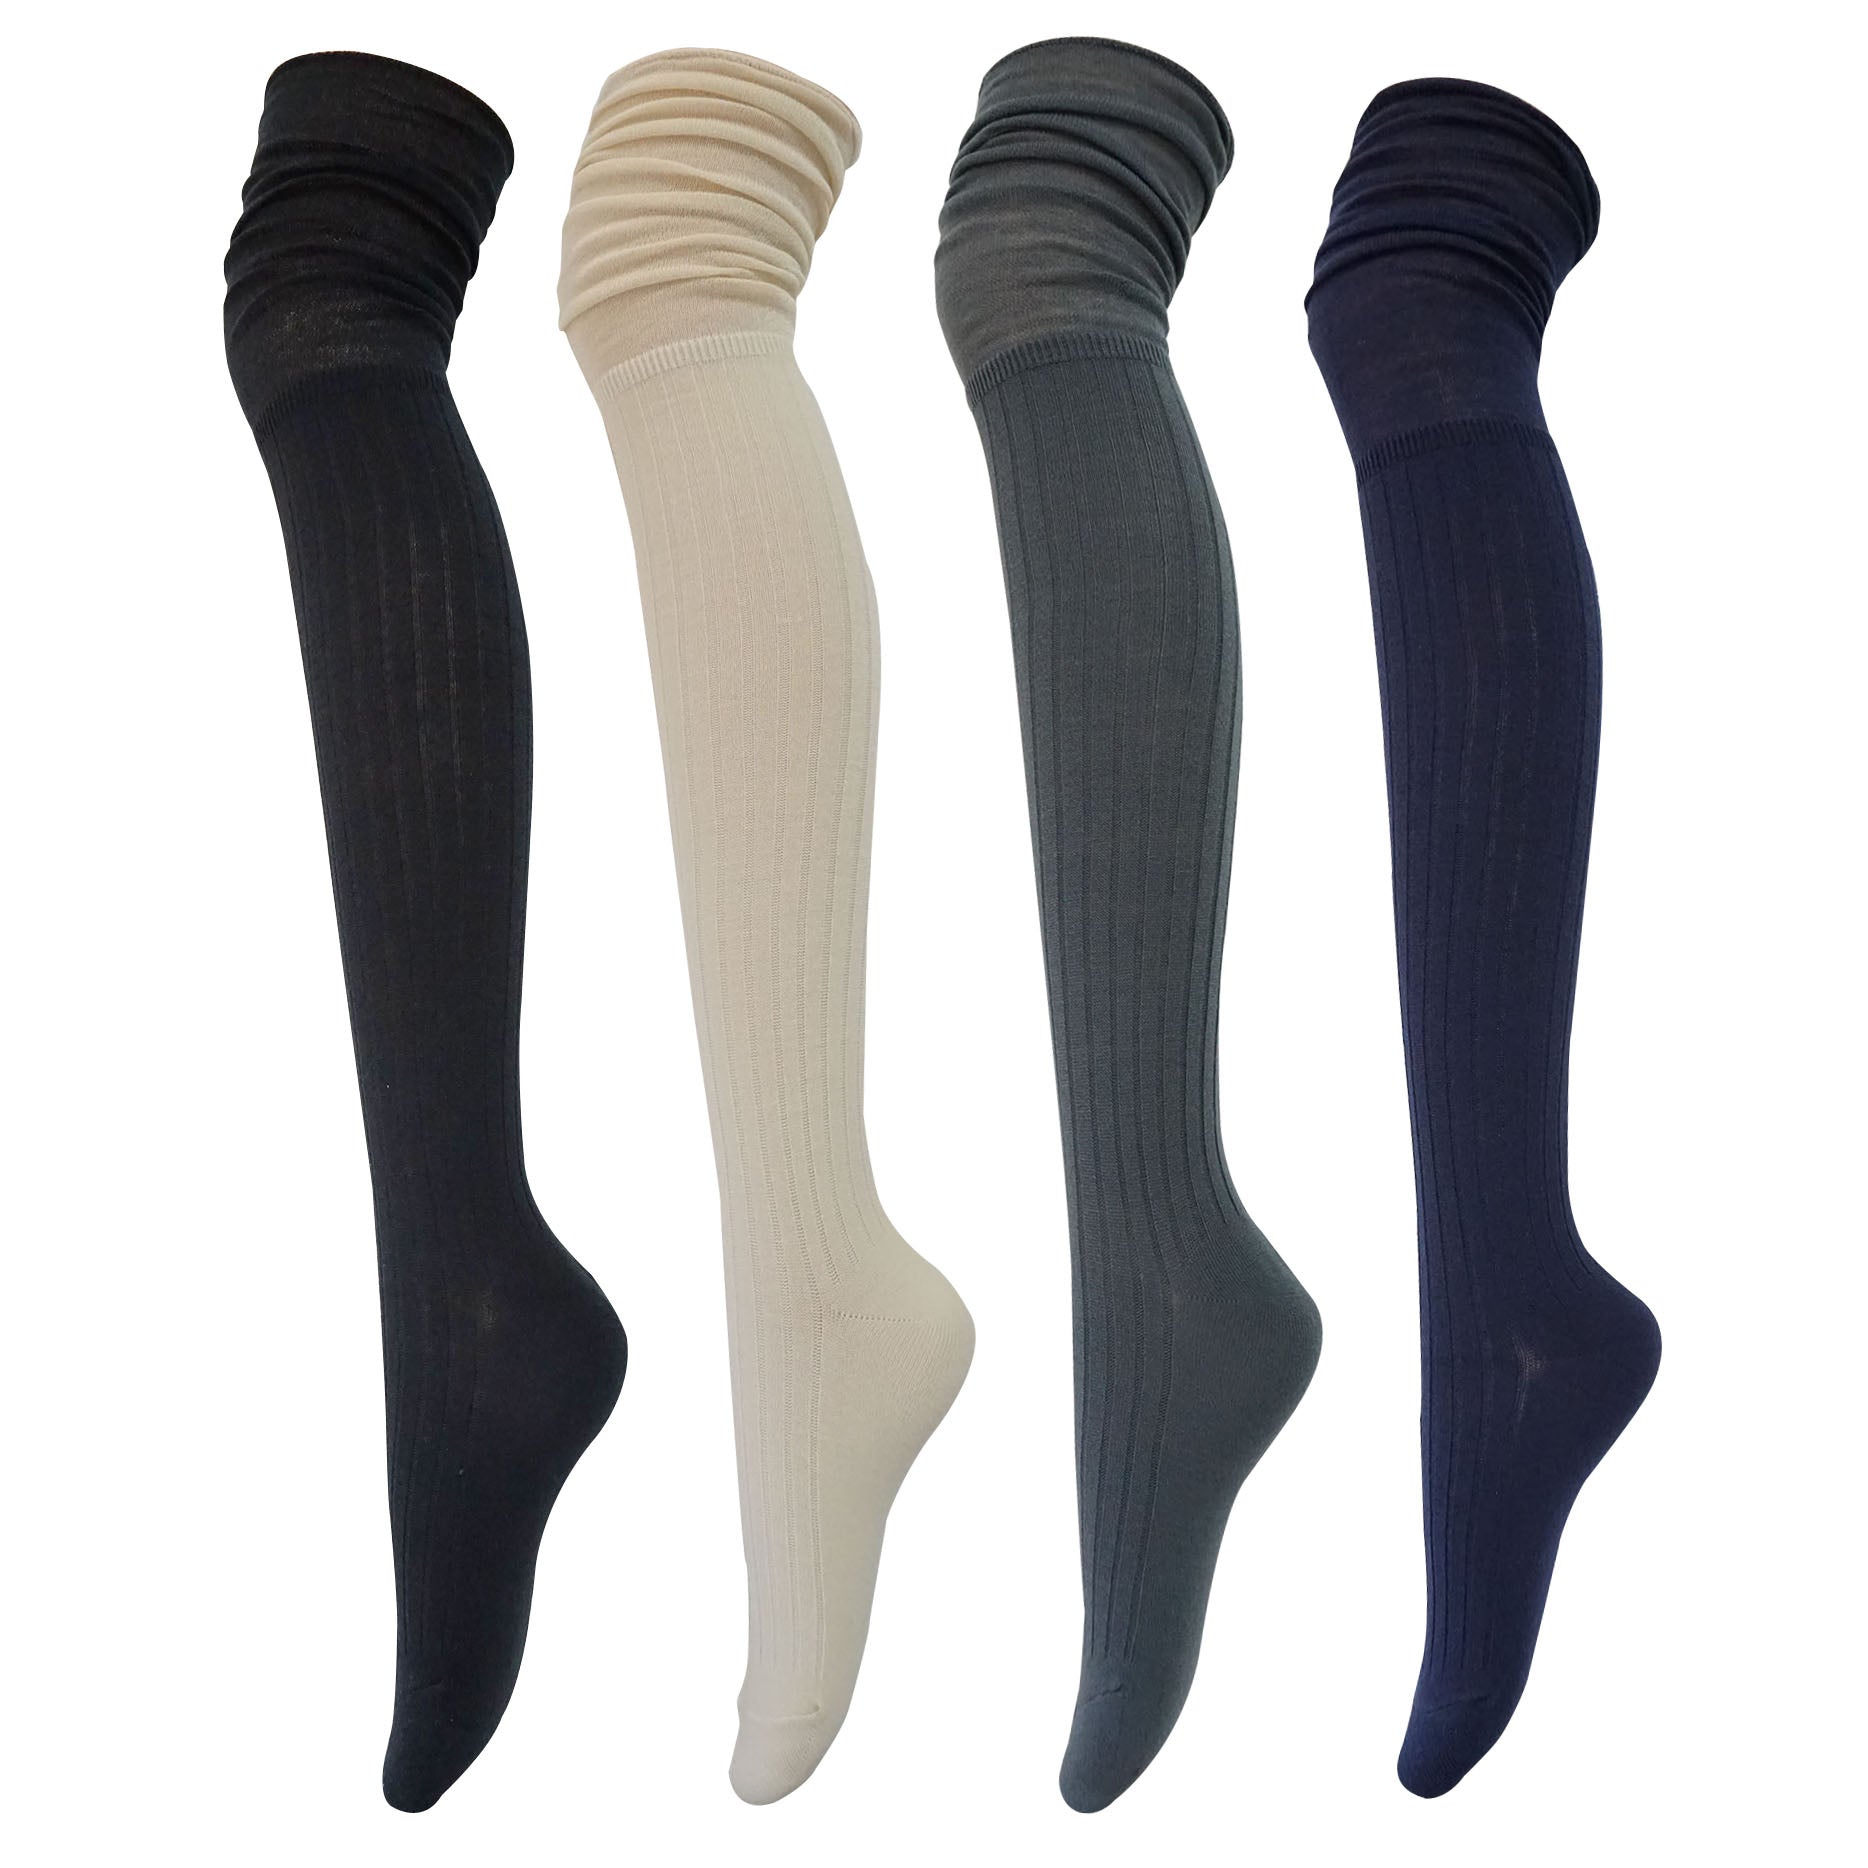 4Pack Women's Slouch Top Over The Knee Socks